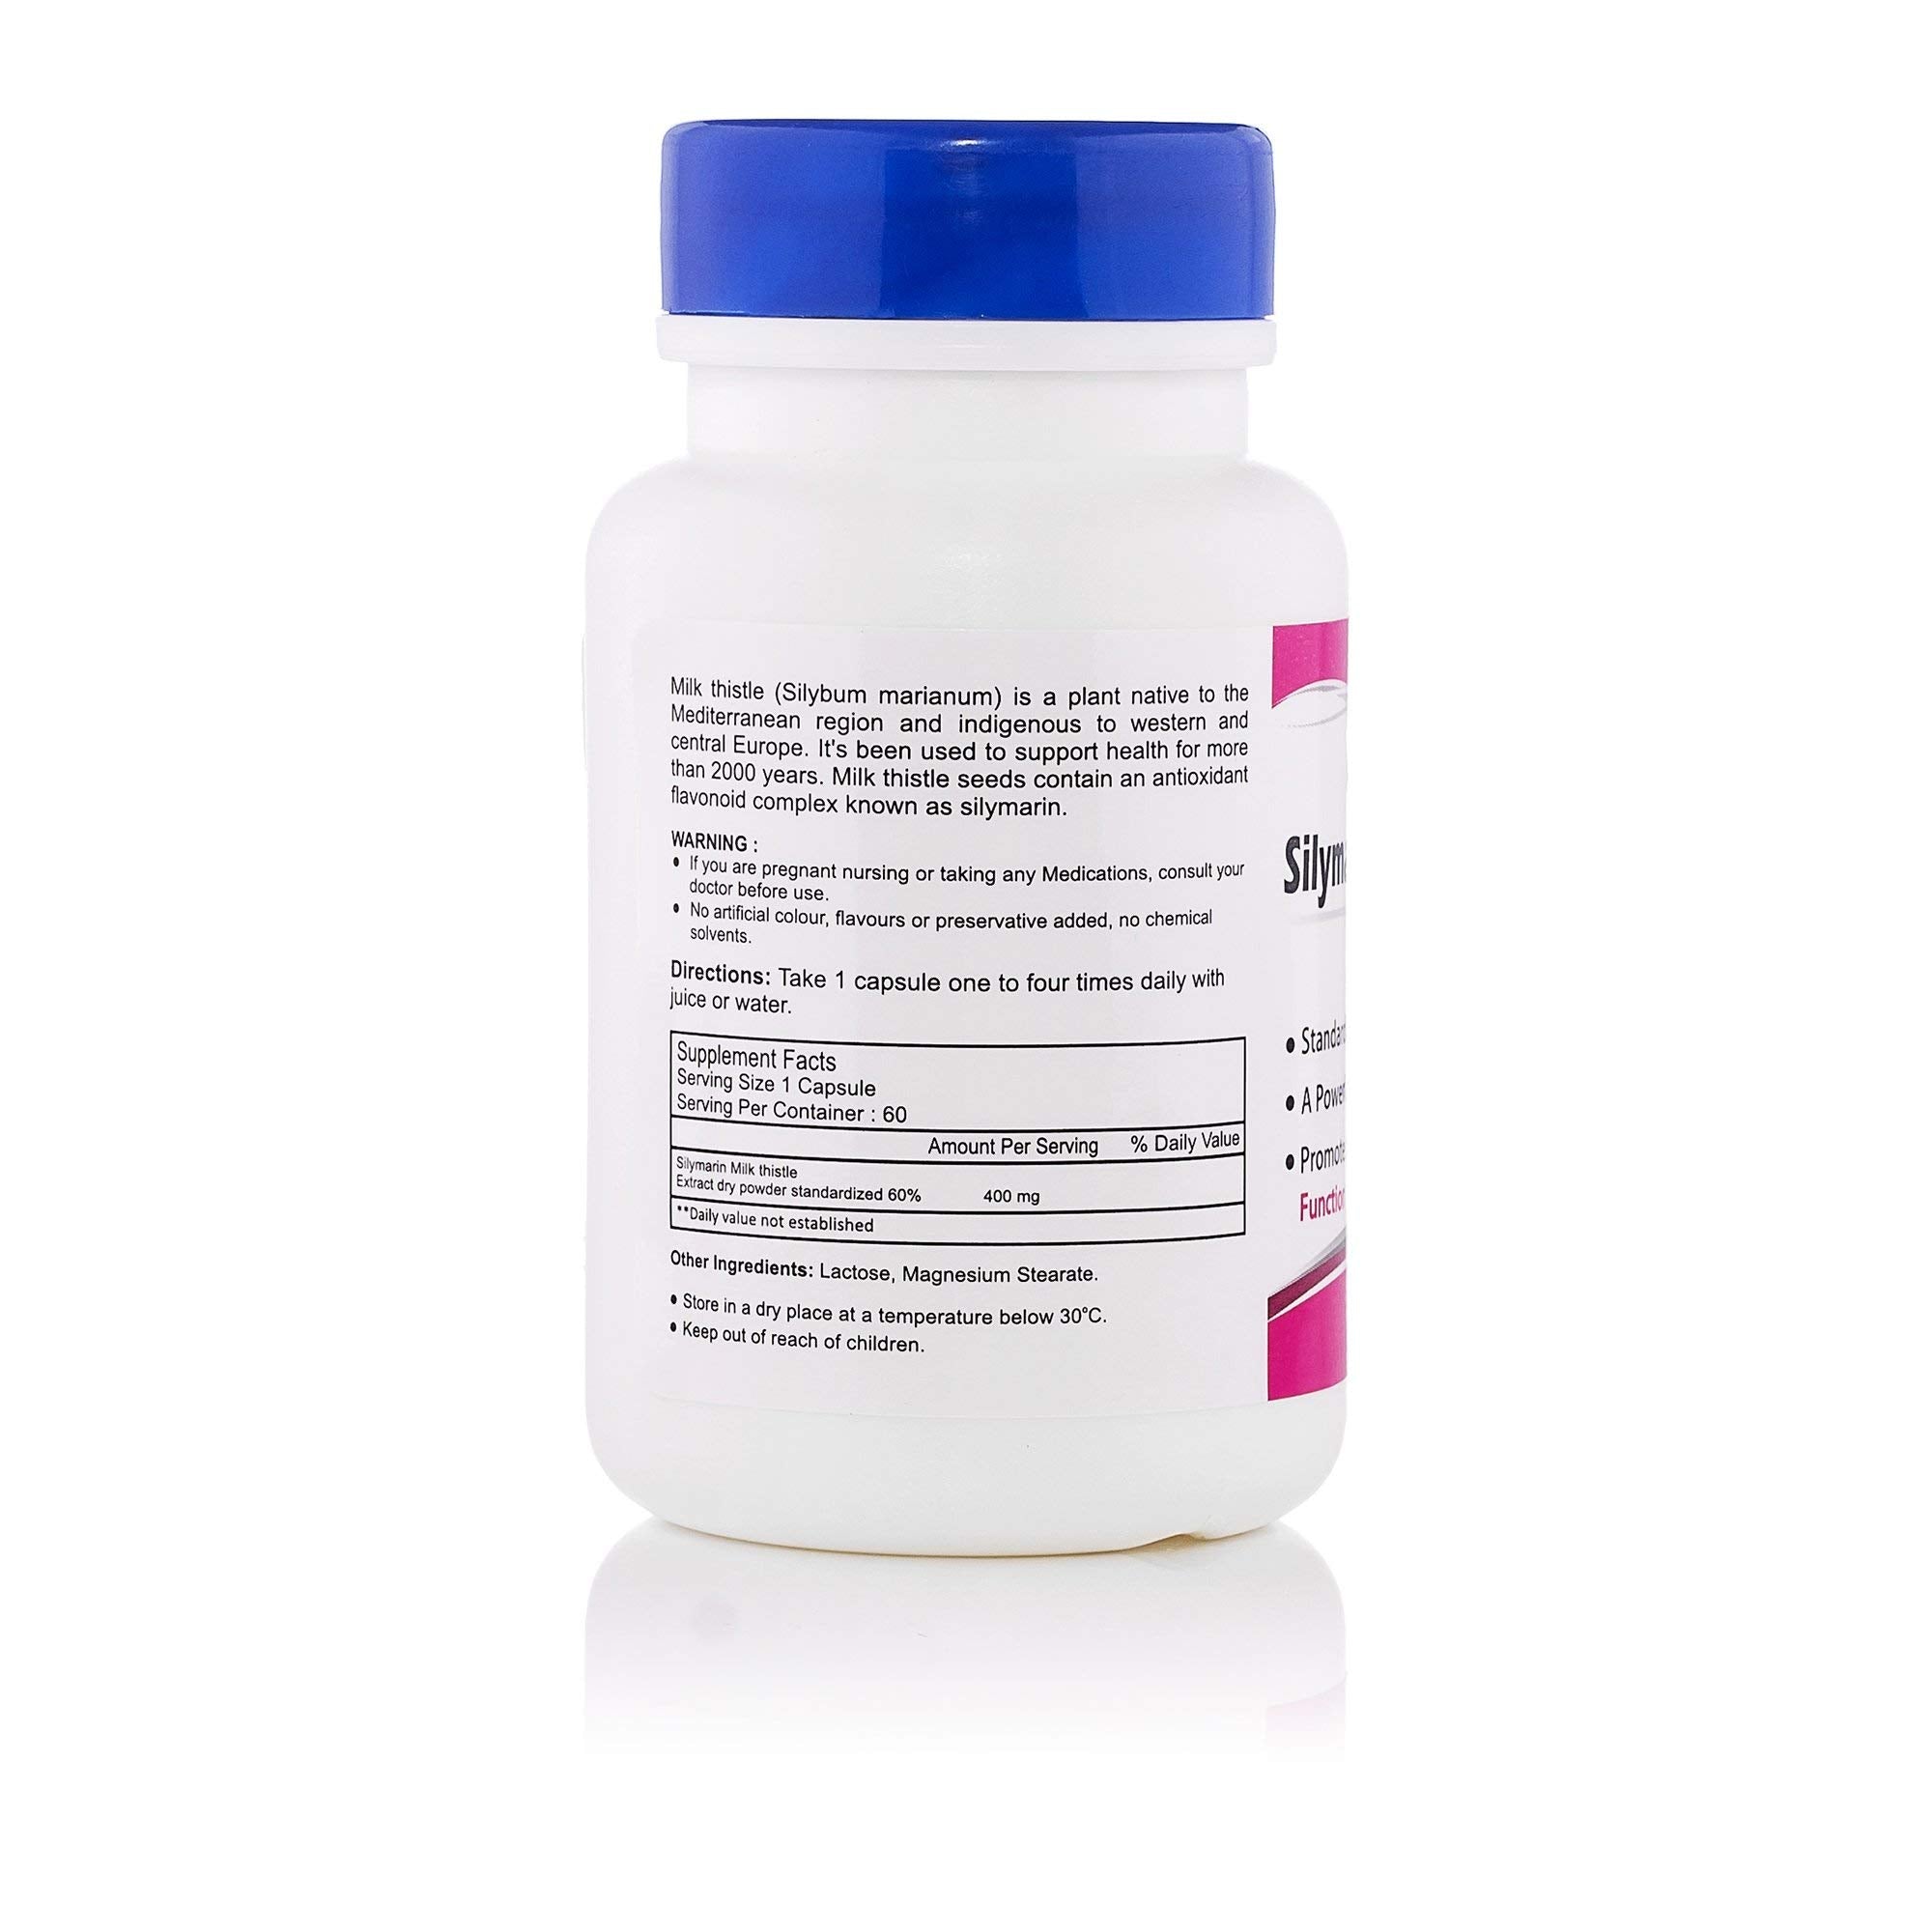 Healthvit Silymarin Milk Thistle 400mg (Standardized To 60%) | A Powerful Antioxidant | Support Liver Health | High Strength | 60 Capsules